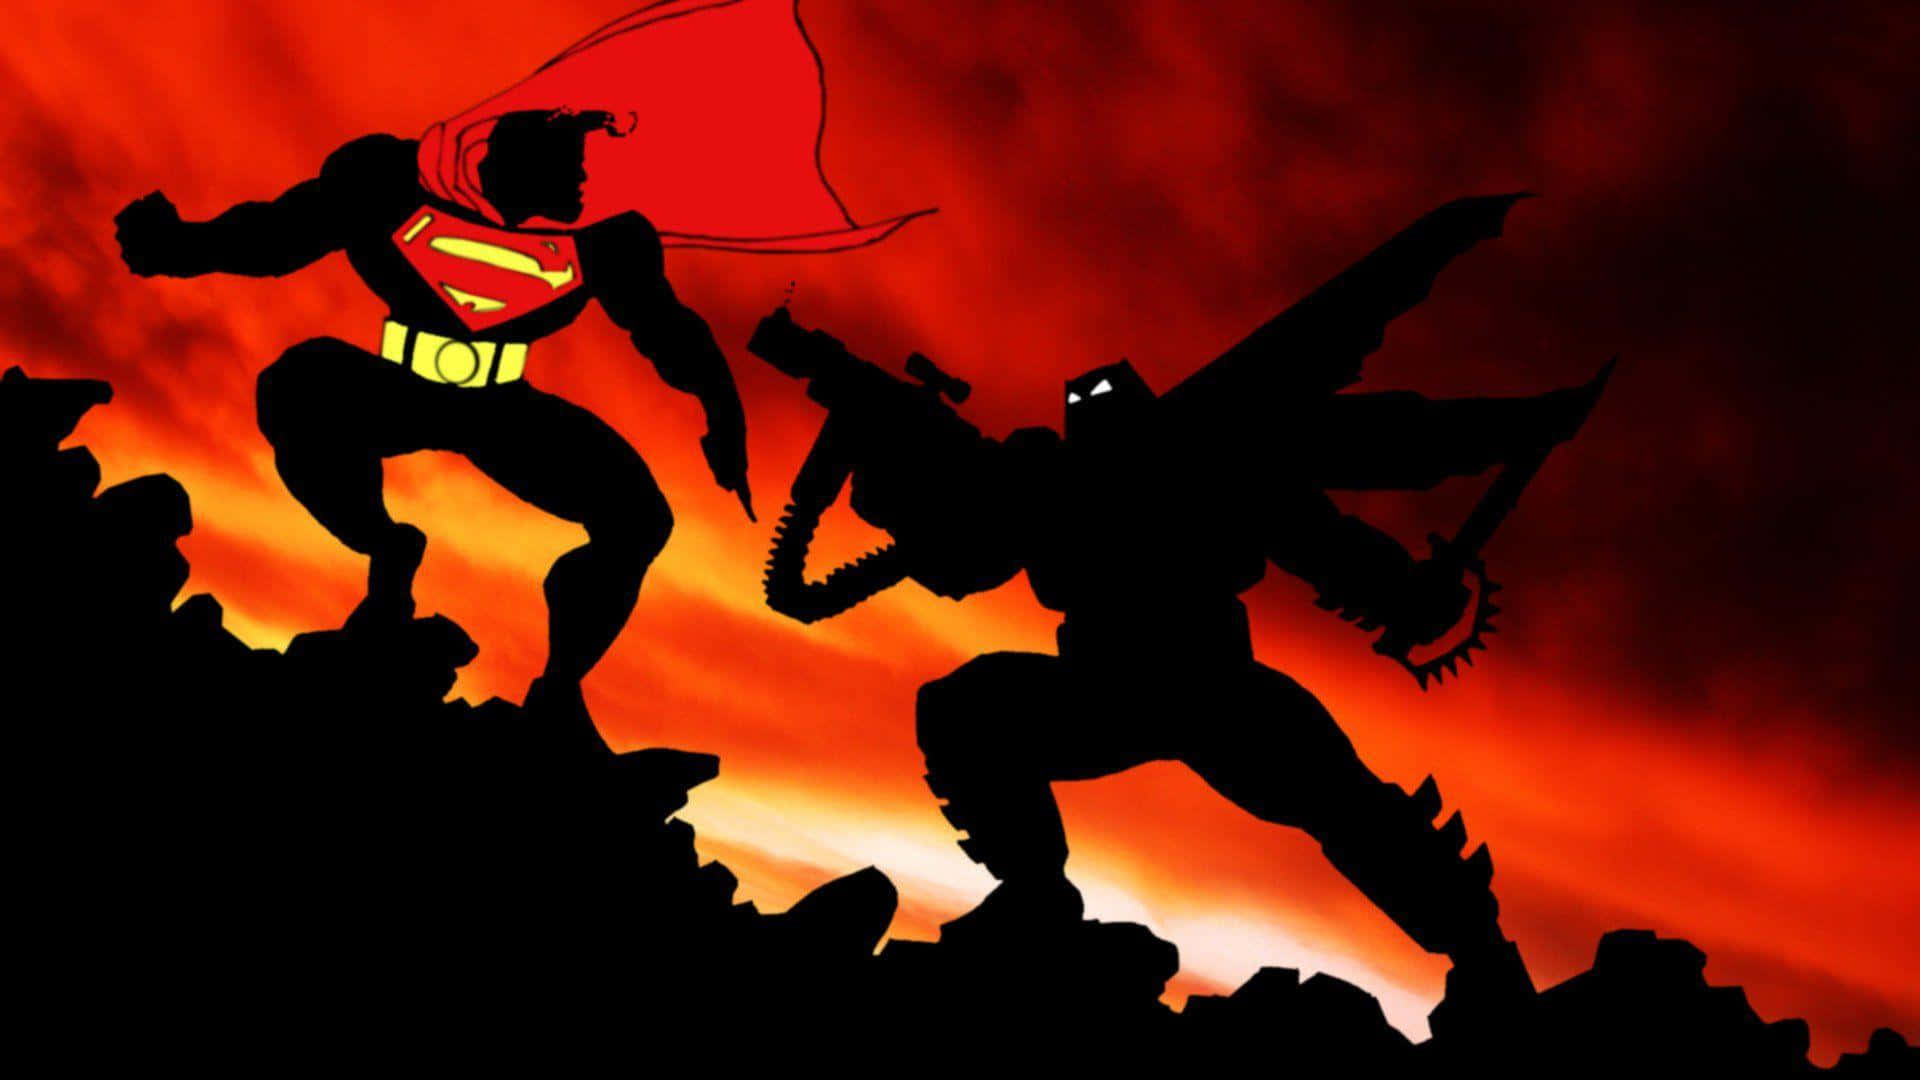 The Dark Knight Returns - Batman standing tall in Gotham City Wallpaper